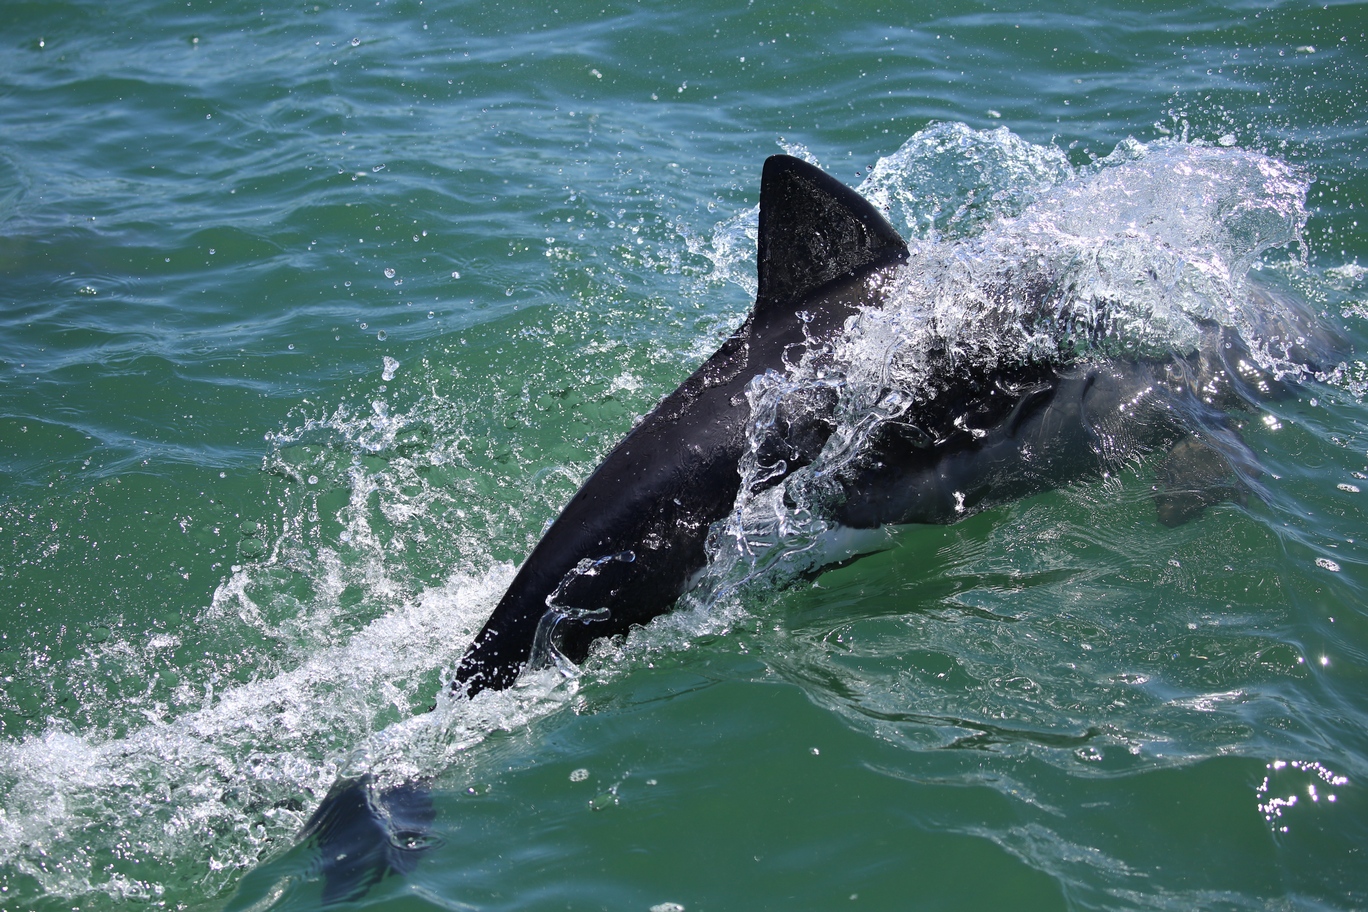 Triangular fin of the Heaviside's dolphin. 
Photographer: Jaz Henry